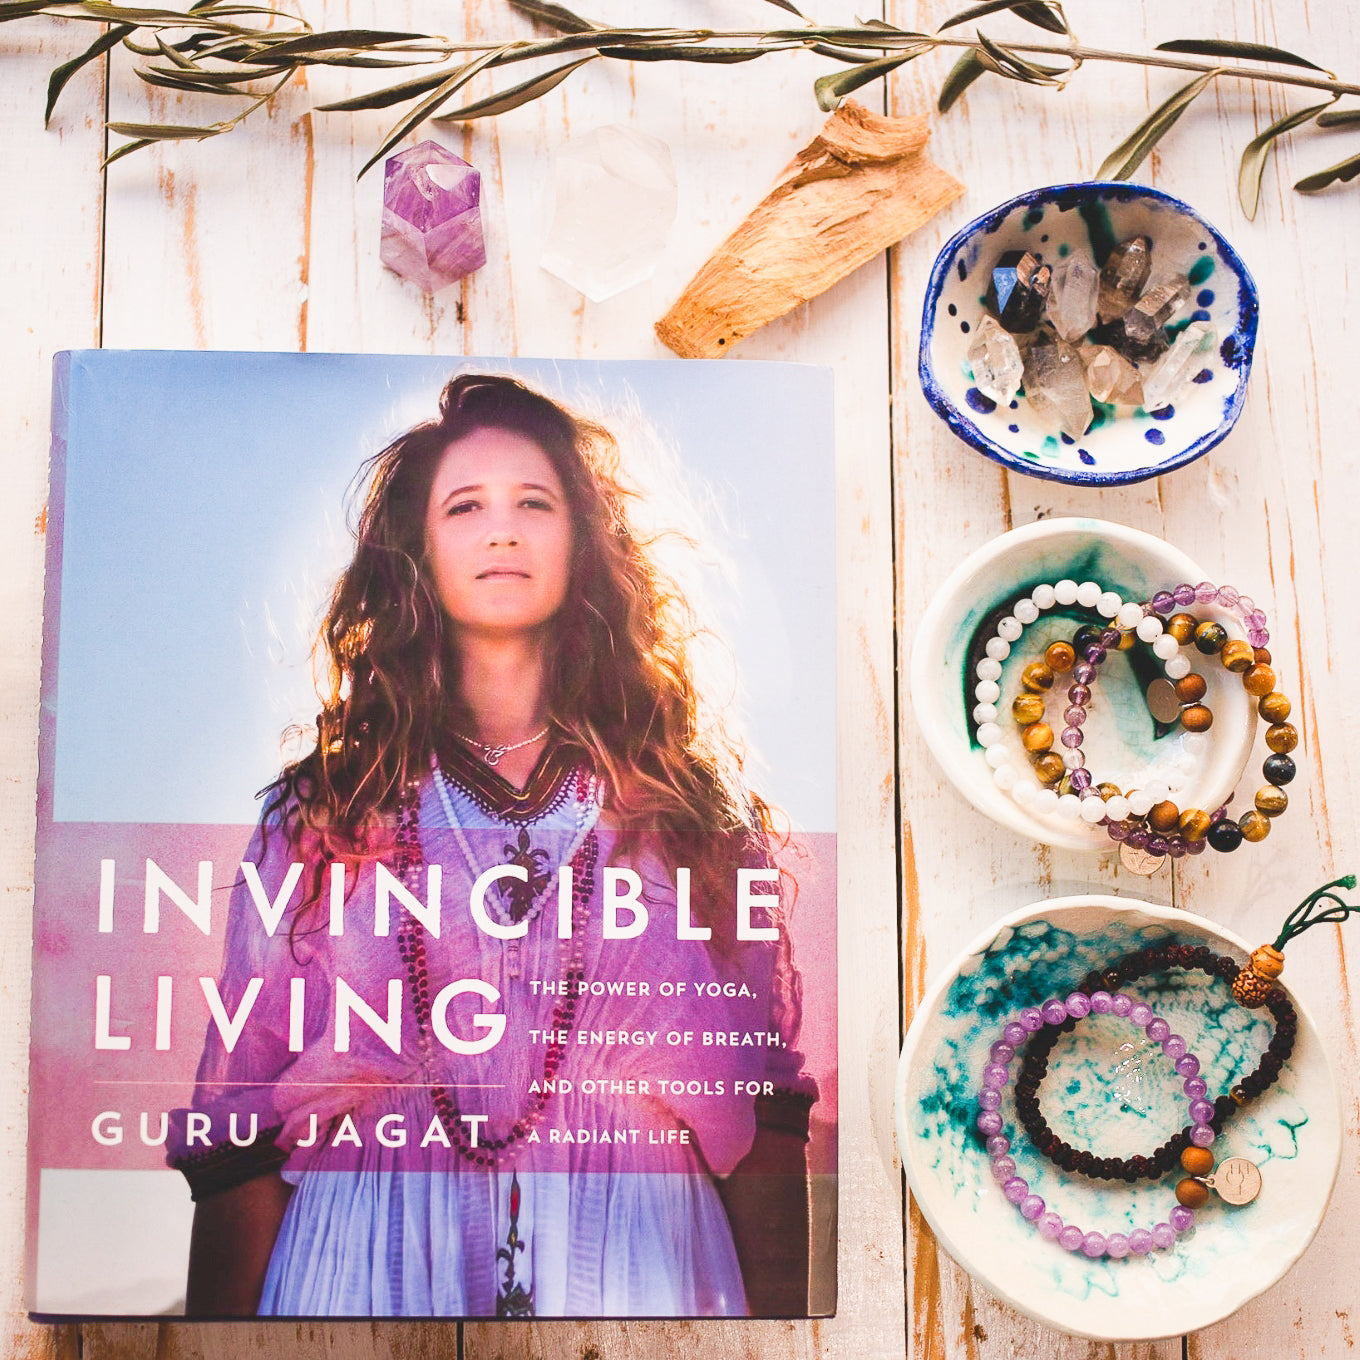 Guru Jagat on Kundalini Yoga and Her New Book, Invincible Living